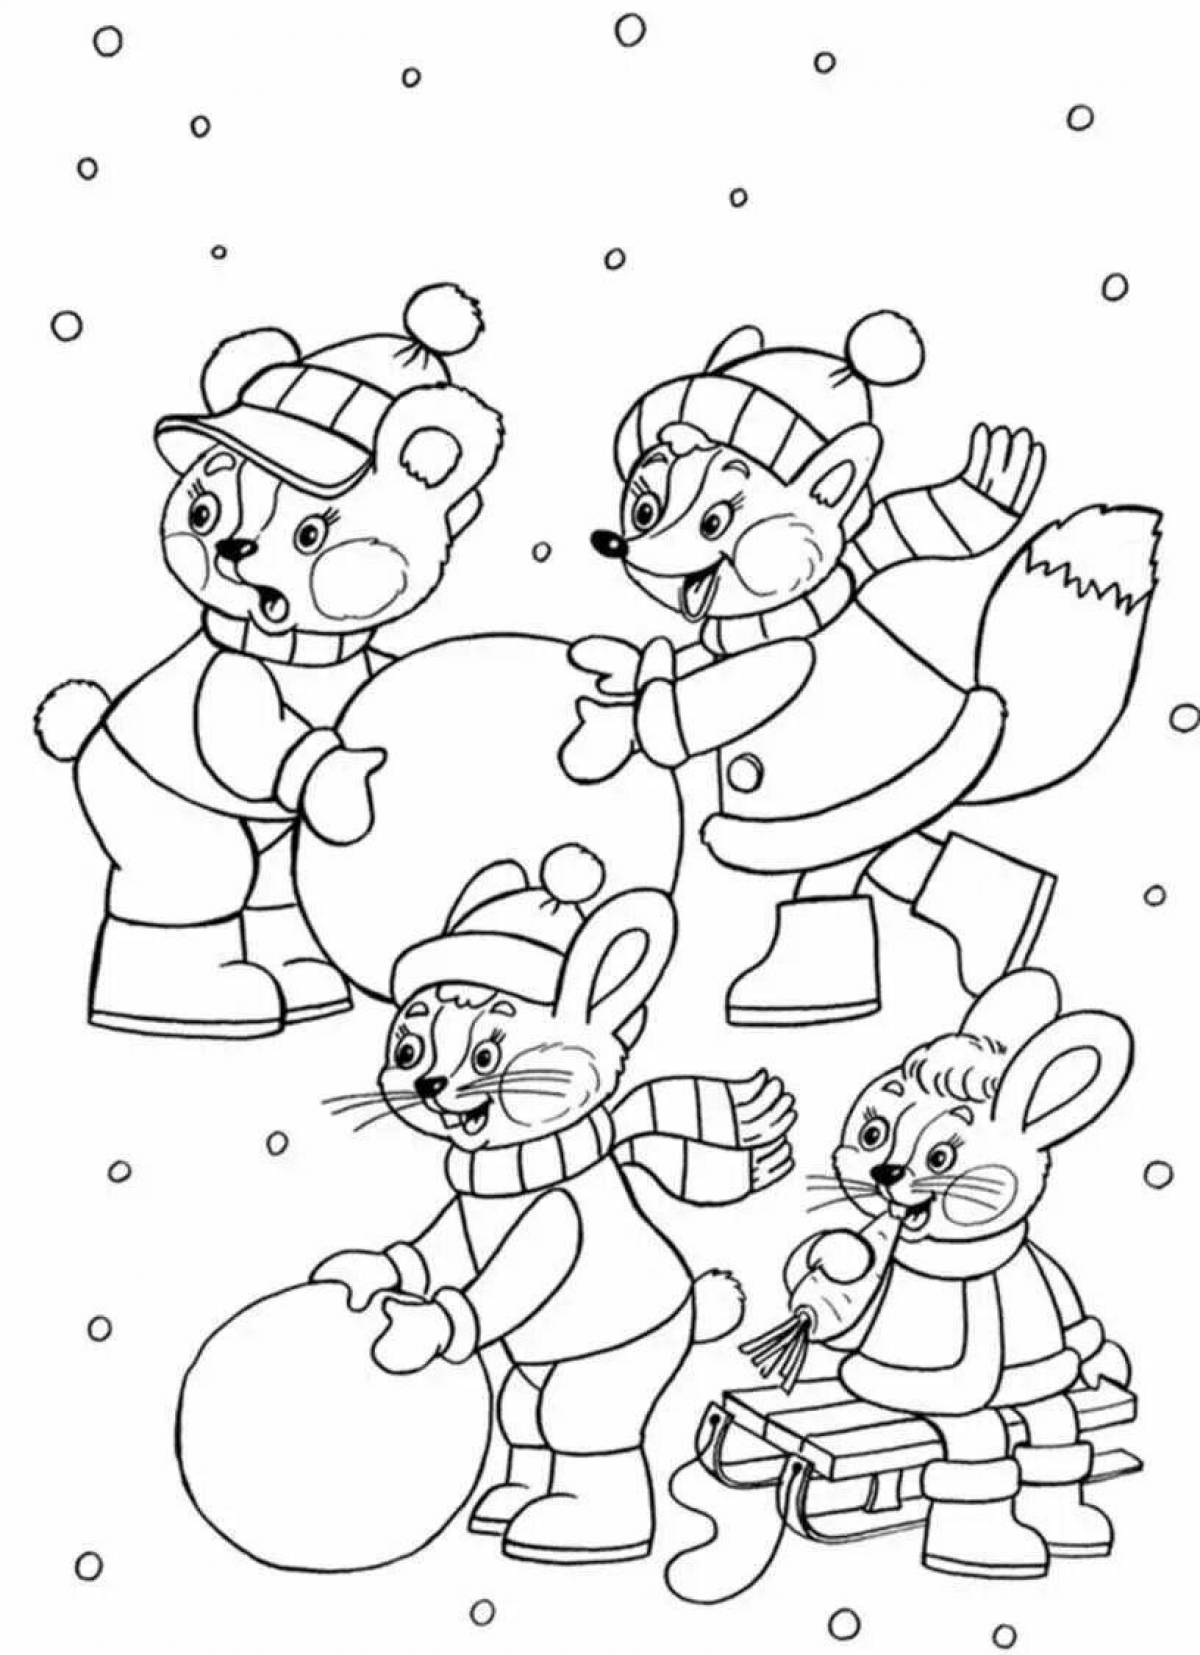 Adorable winter senior coloring group